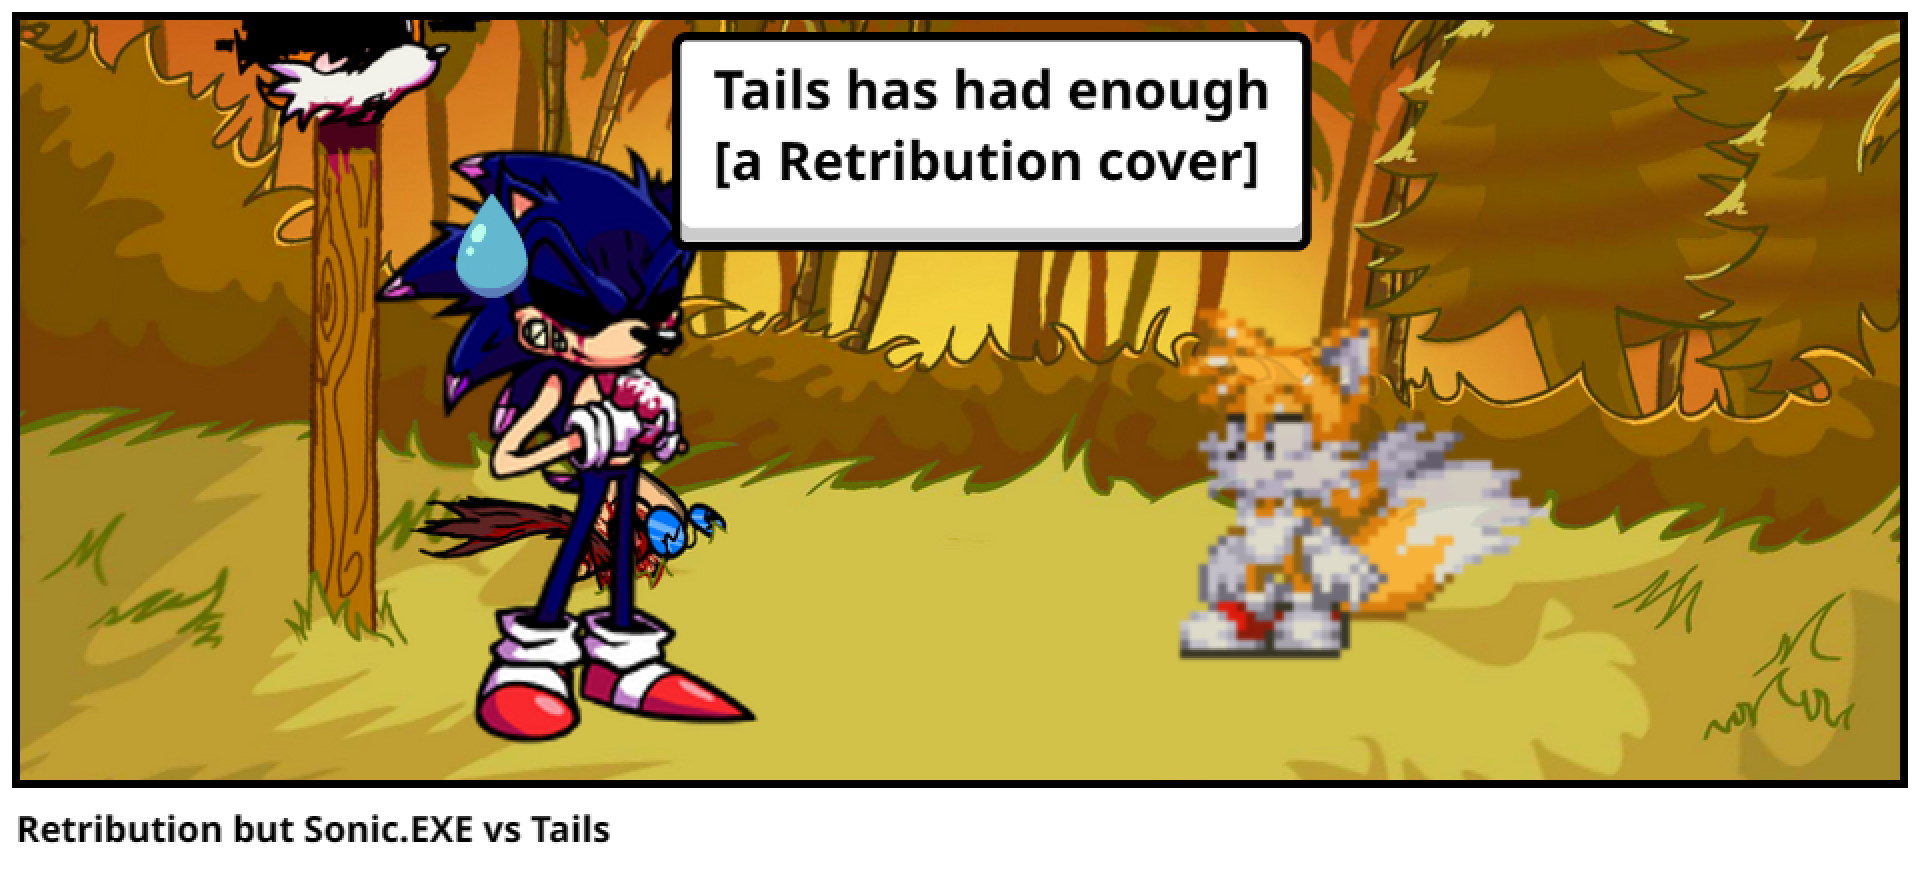 Retribution but Sonic.EXE vs Tails